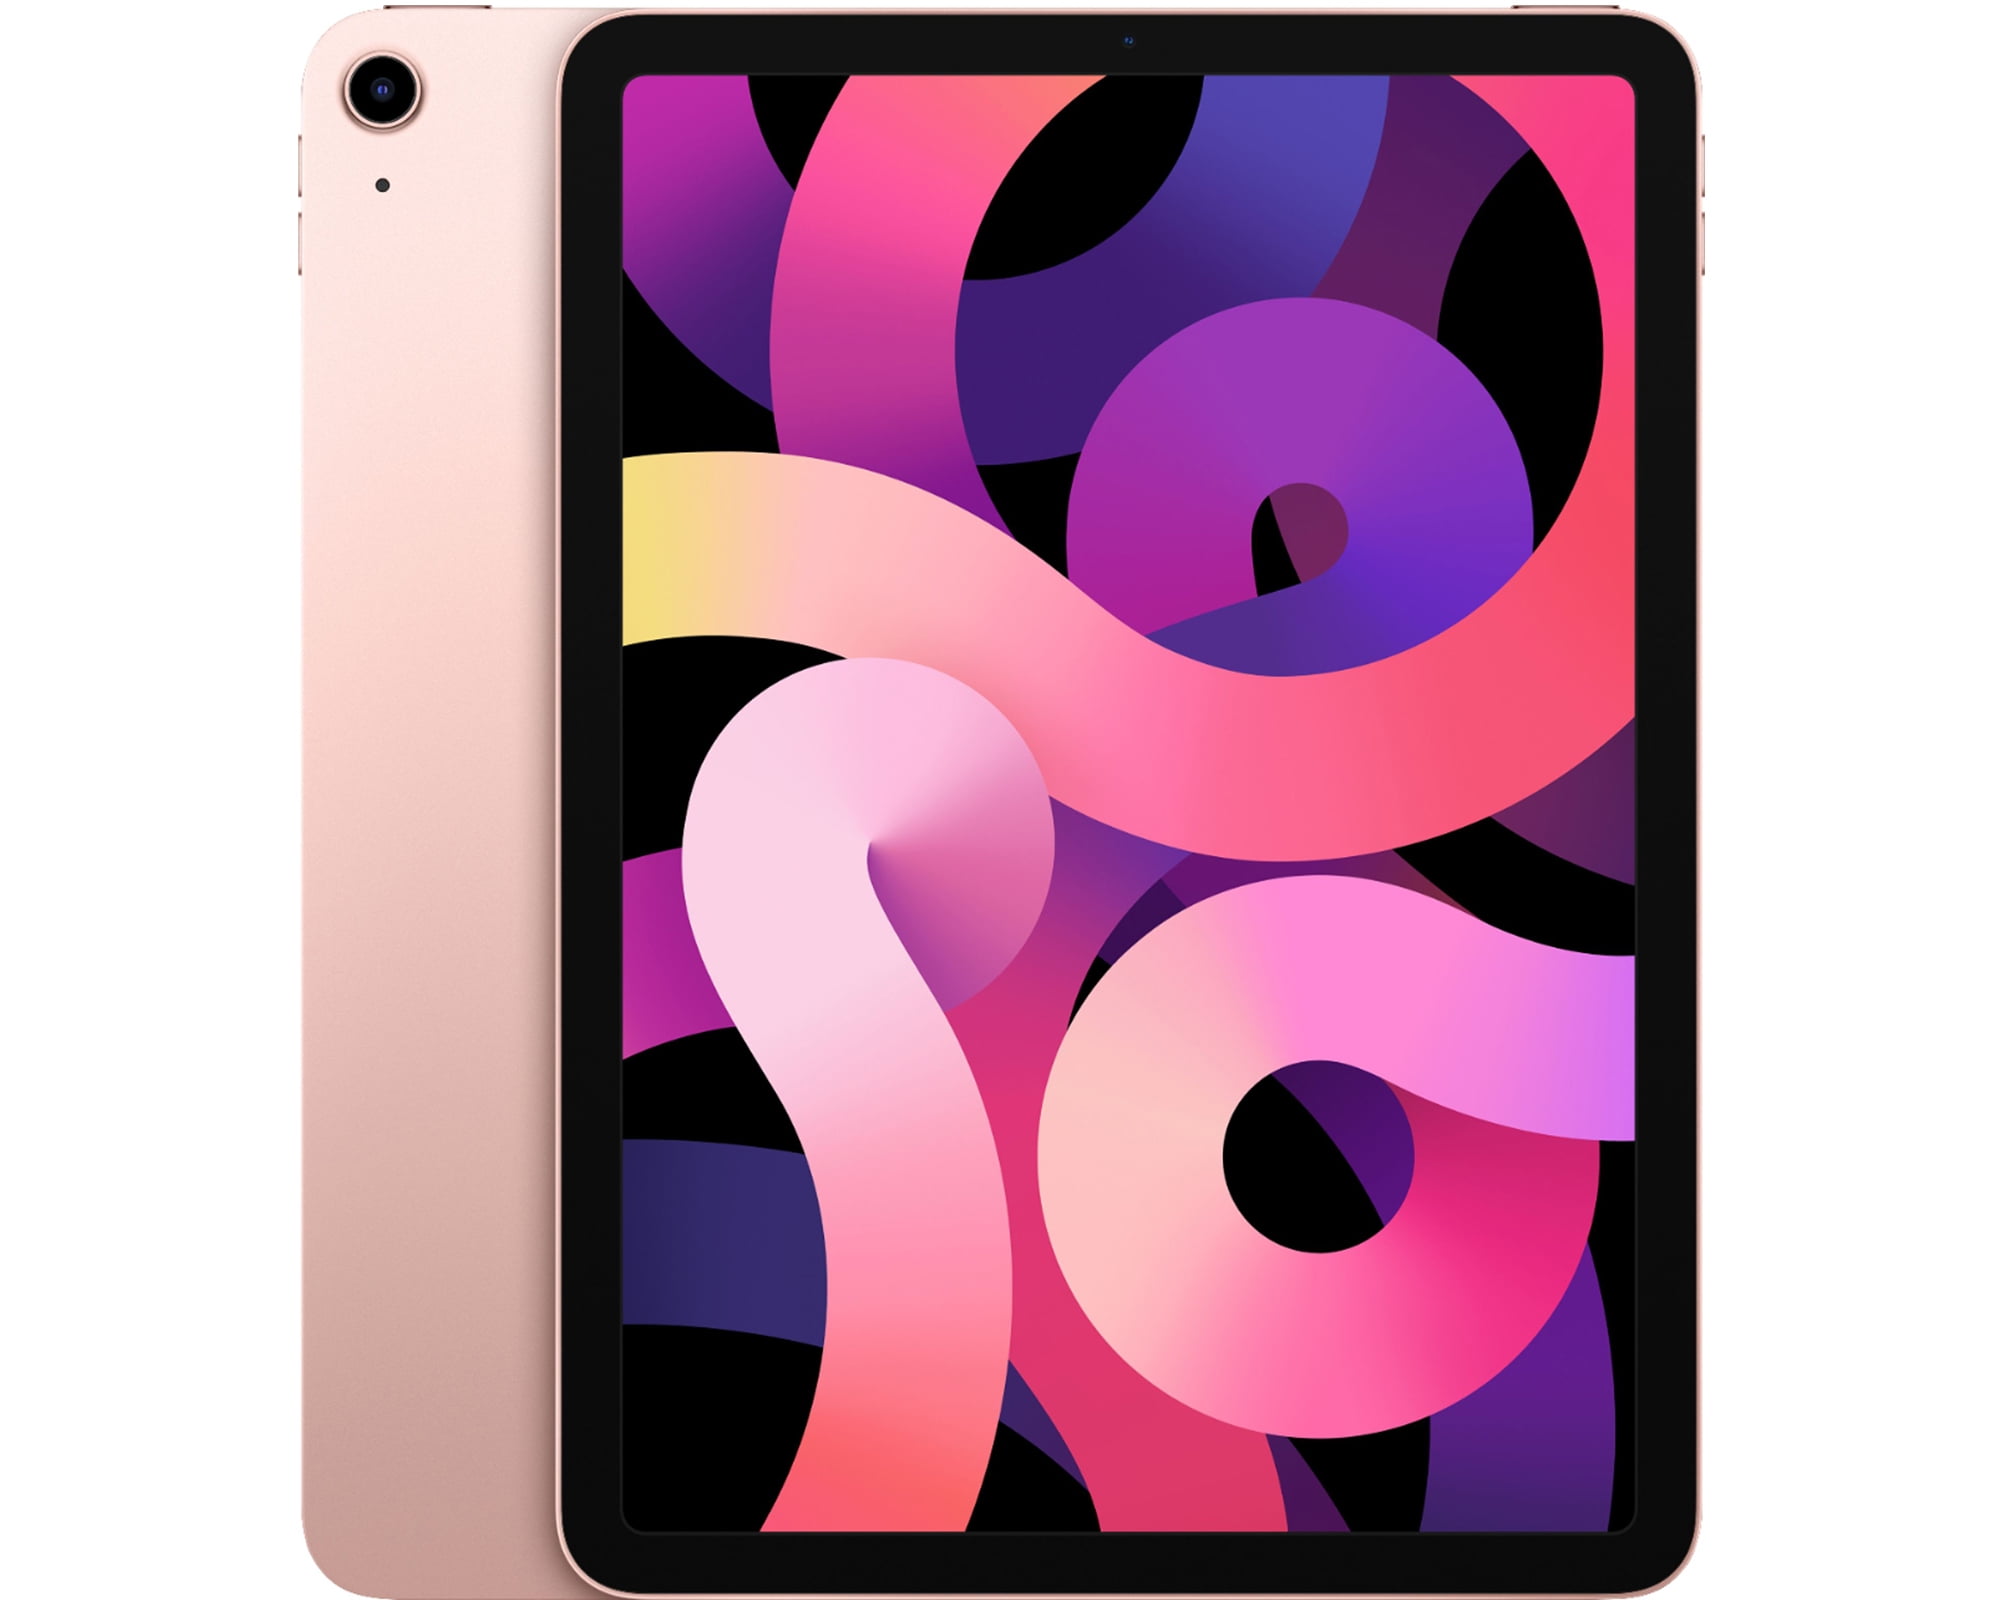 Restored Apple iPad Air 4 64GB Rose Gold Wi-Fi MYFP2LL/A (Latest